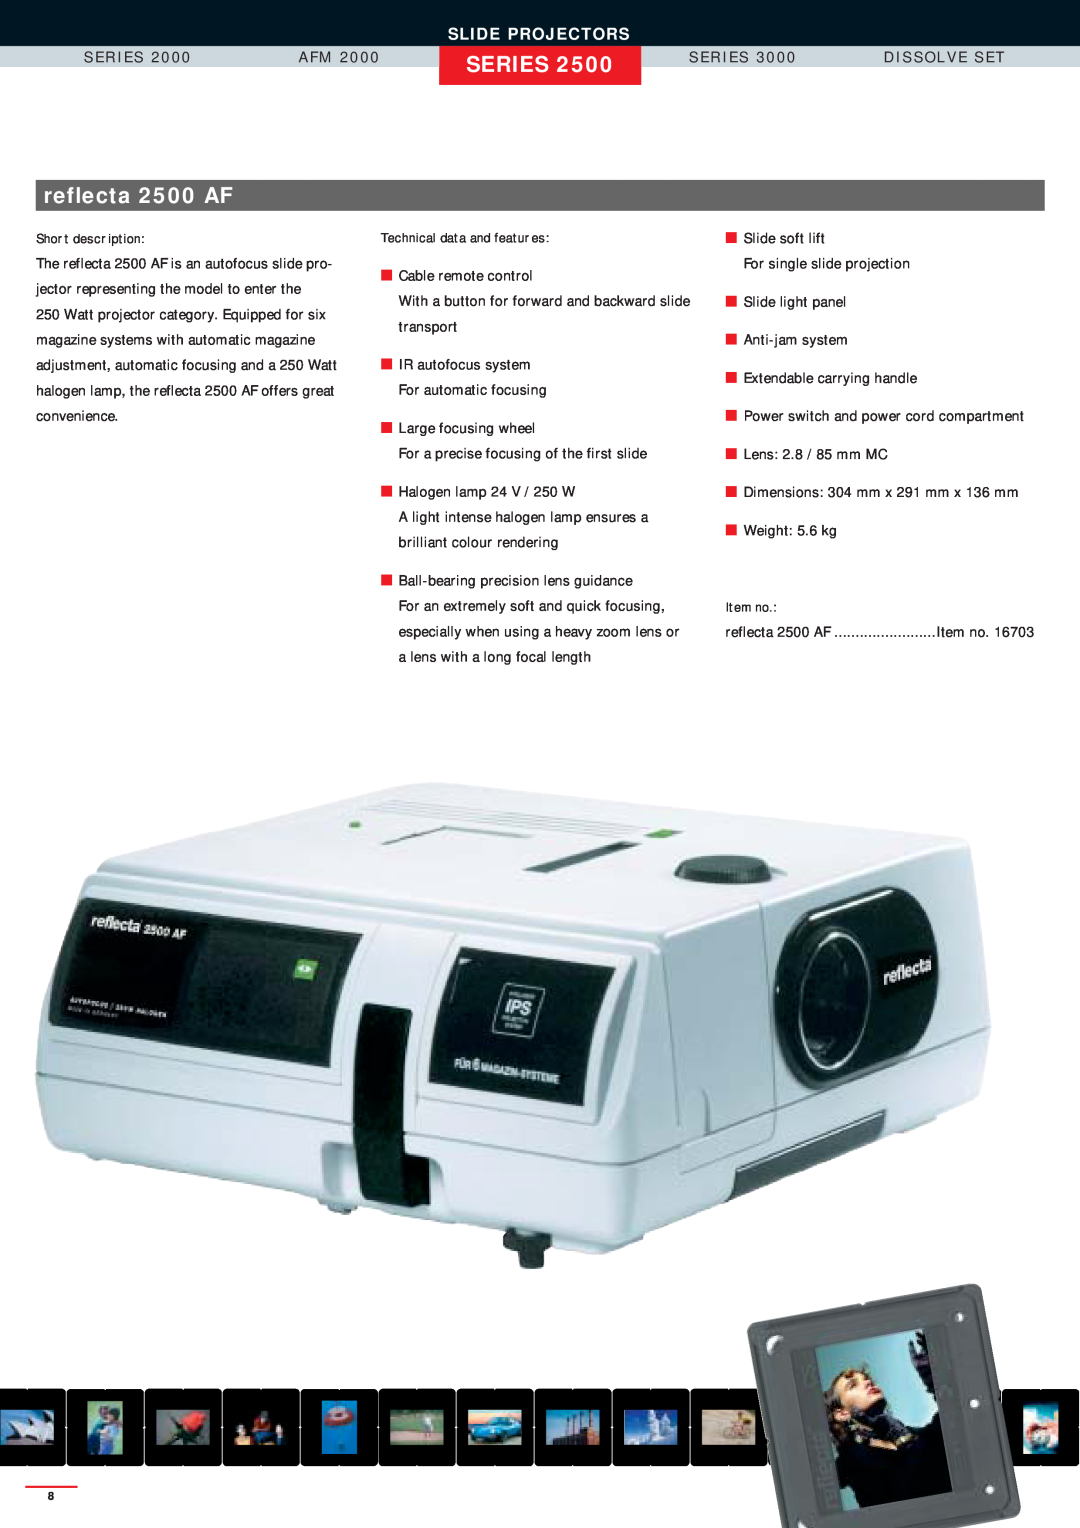 Reflecta SERIES 2000 manual reflecta 2500 AF, Series, Slide Projectors, S E R I E S 2 0 0, A F M 2 0 0, S E R I E S 3 0 